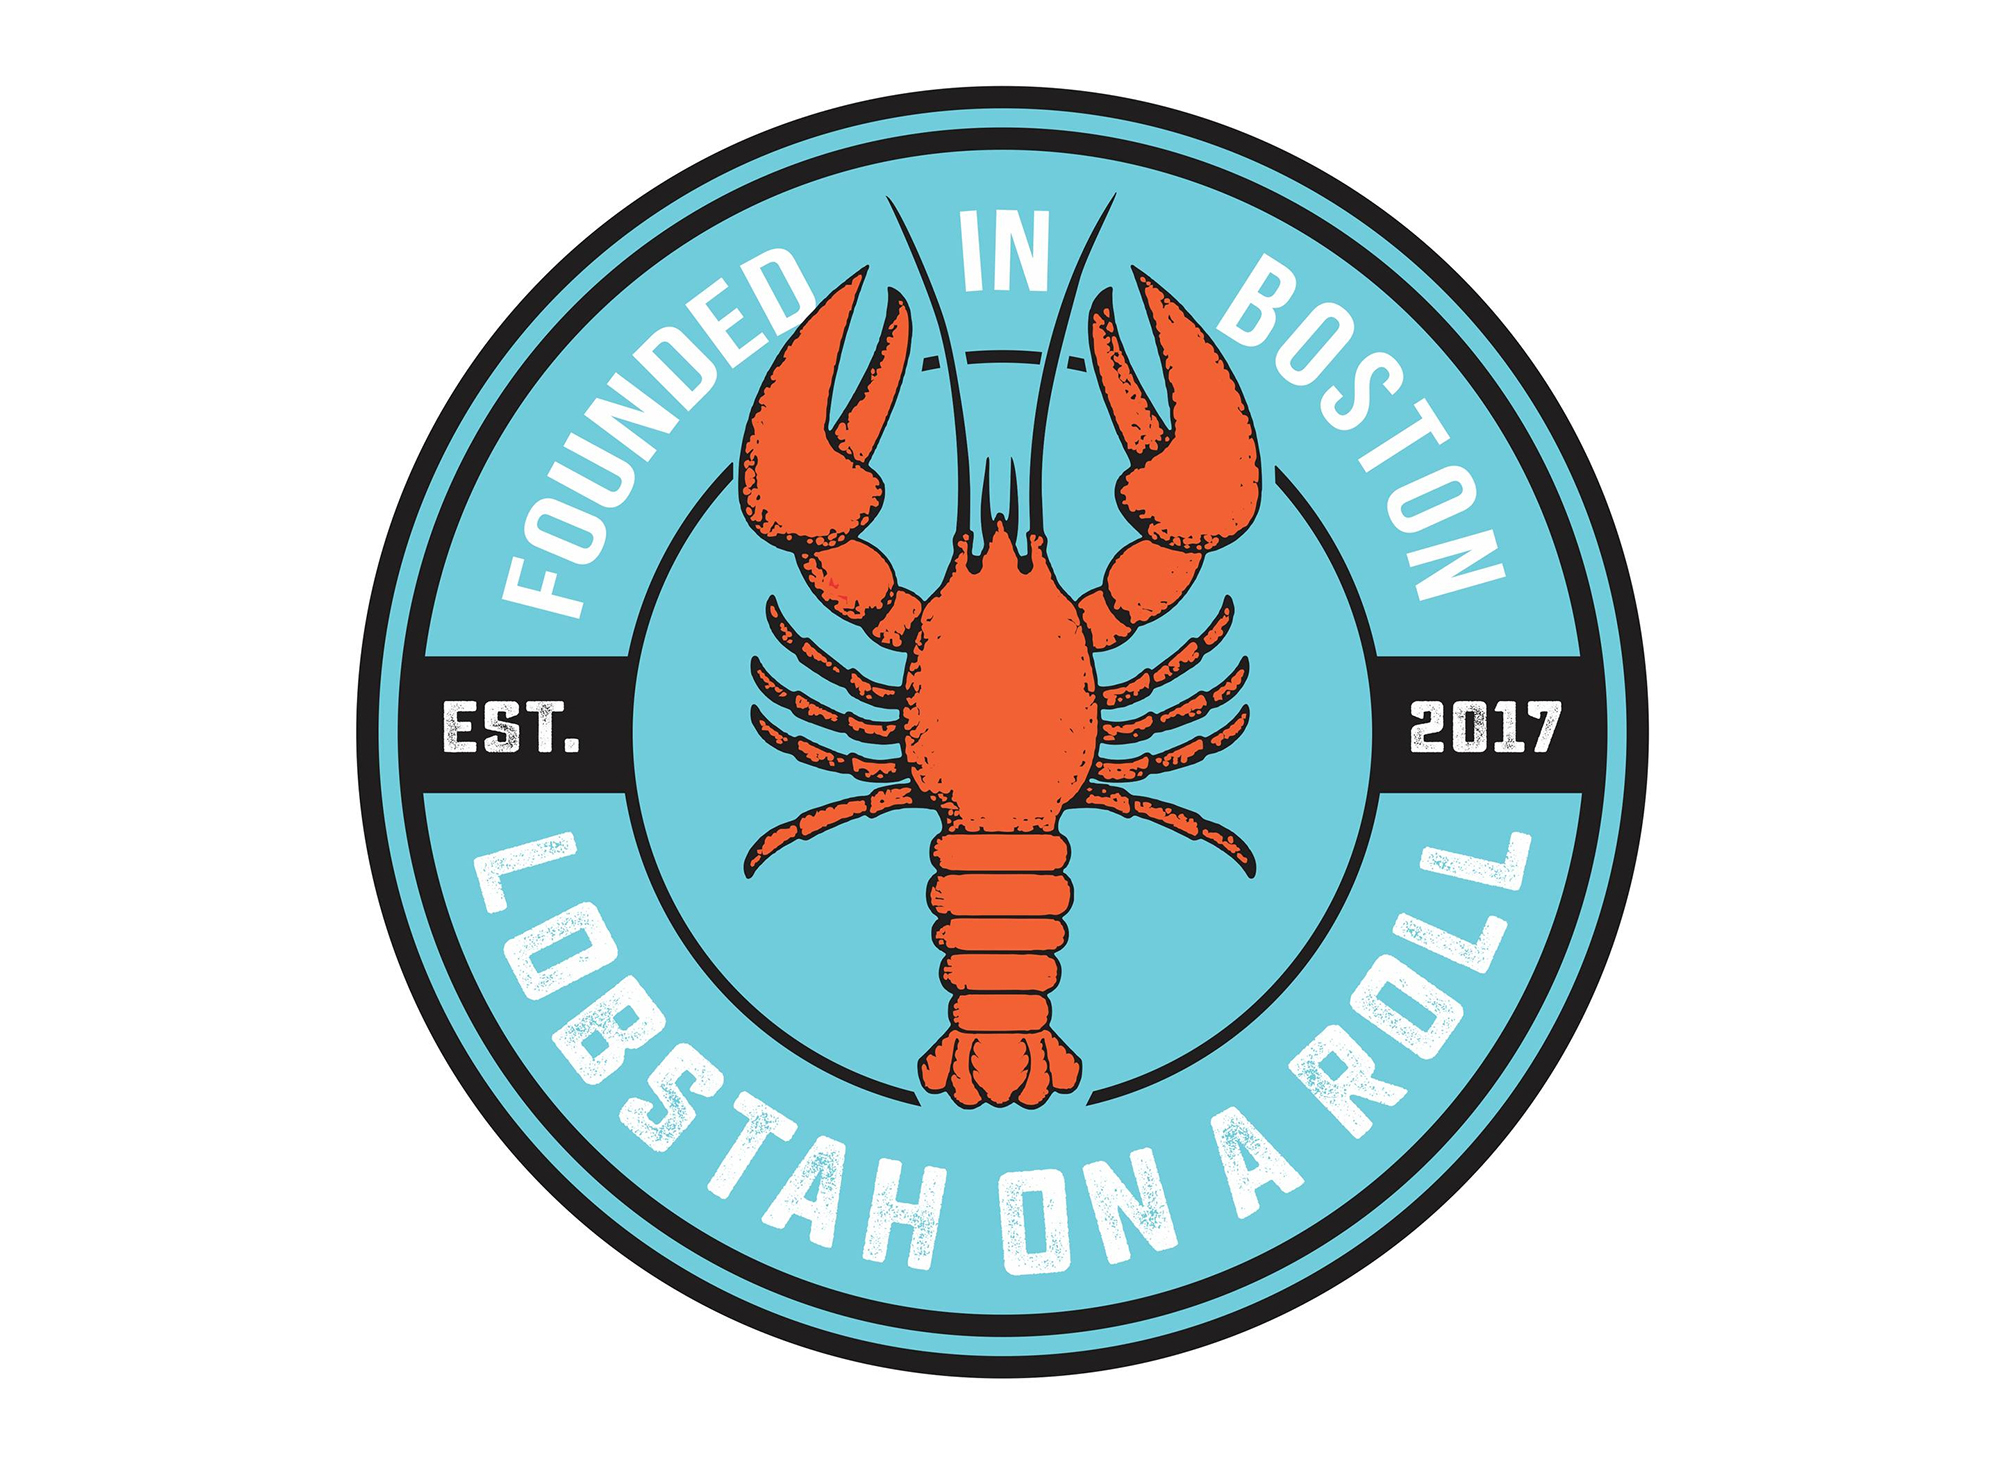 The Lobstah on a Roll logo.